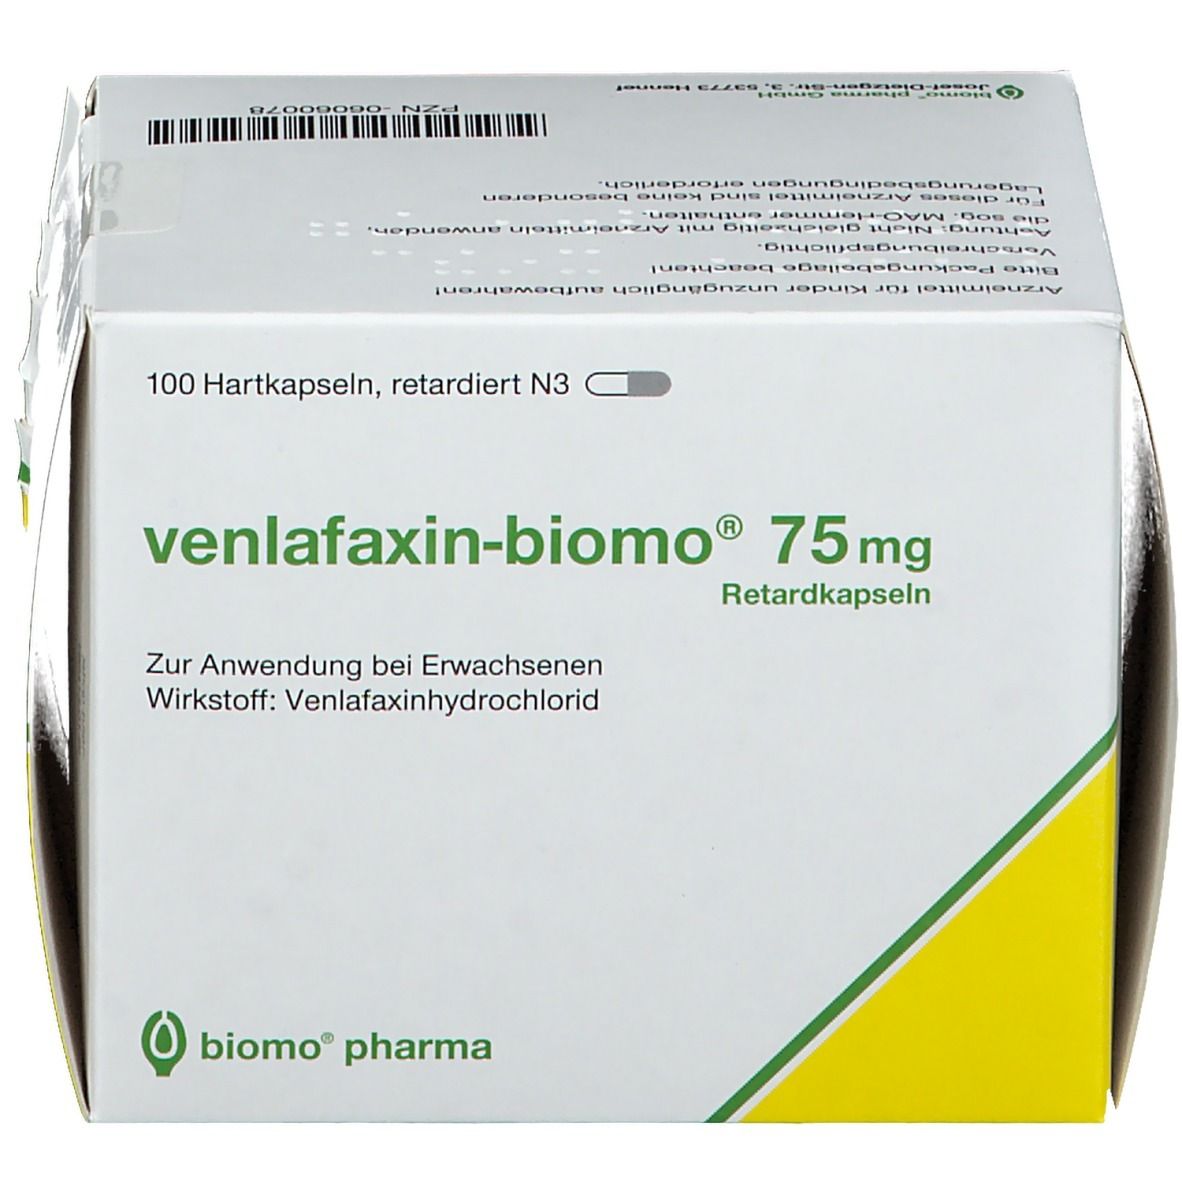 venlafaxin-biomo® 75 mg